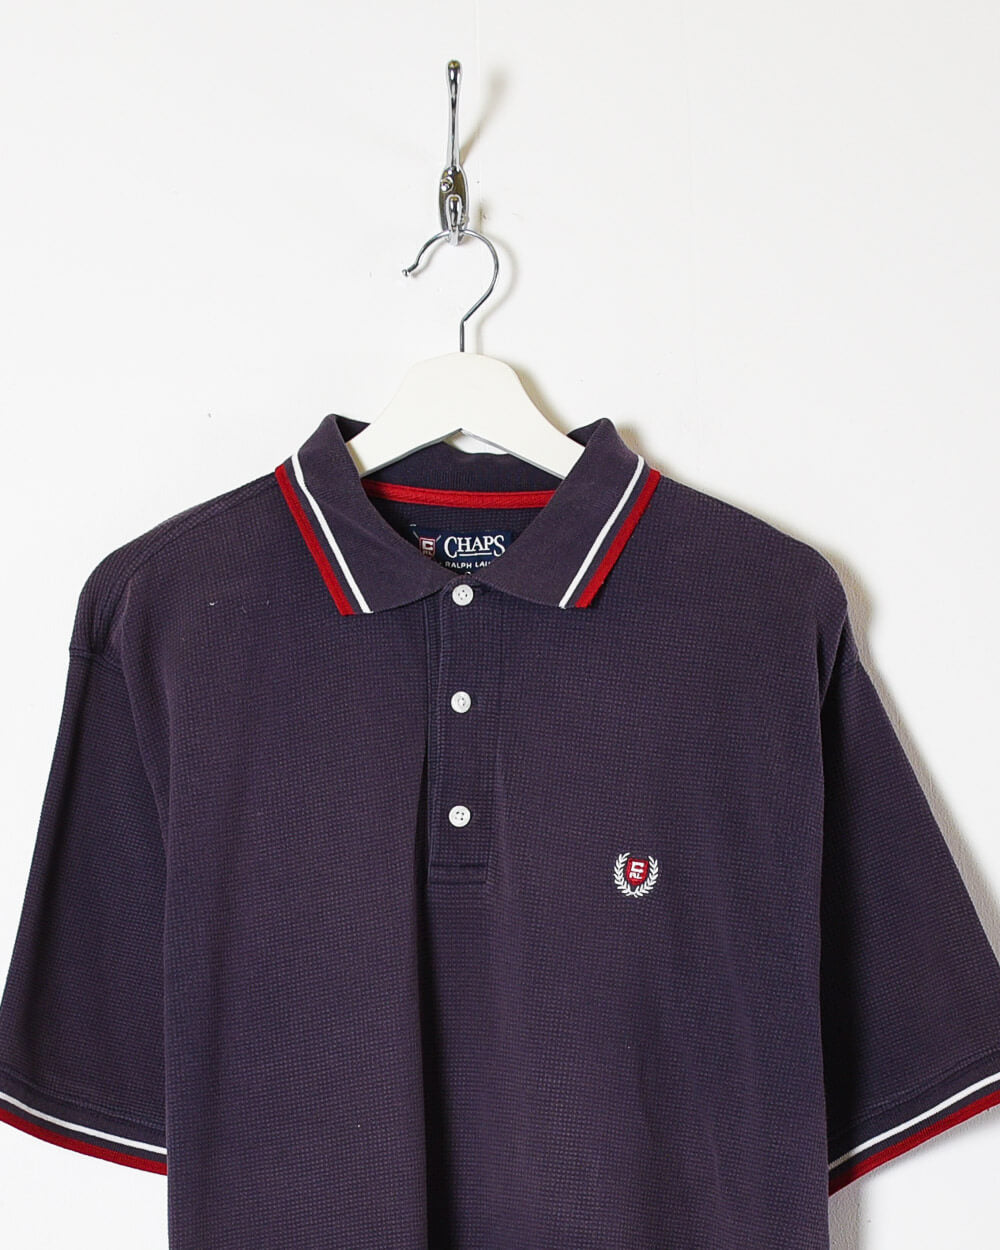 Purple Ralph Lauren Chaps Polo Shirt - Large